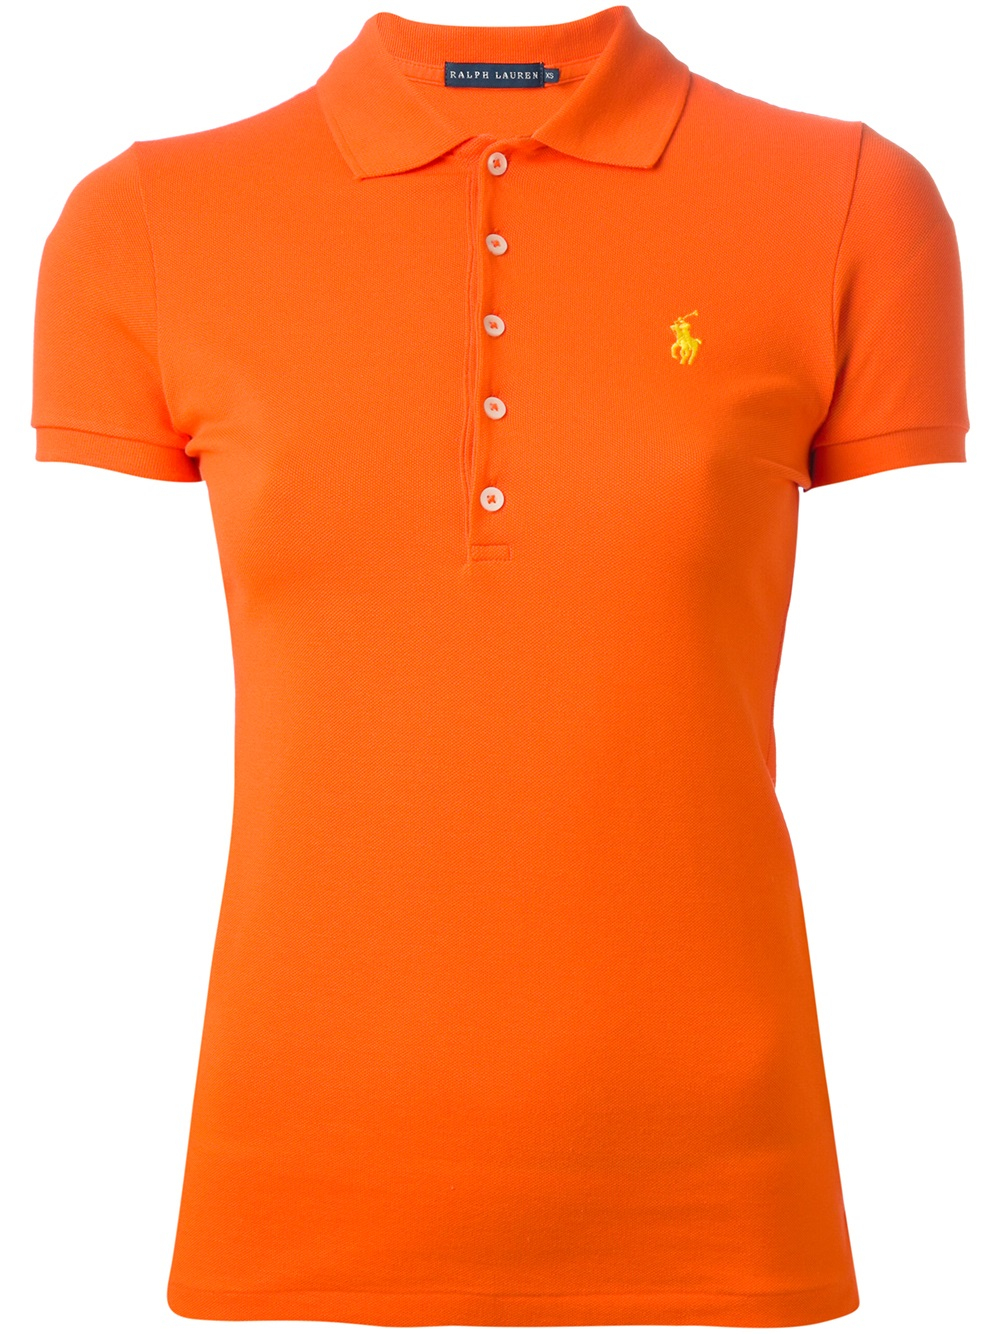 Lyst - Ralph Lauren Blue Label Classic Polo Shirt in Orange